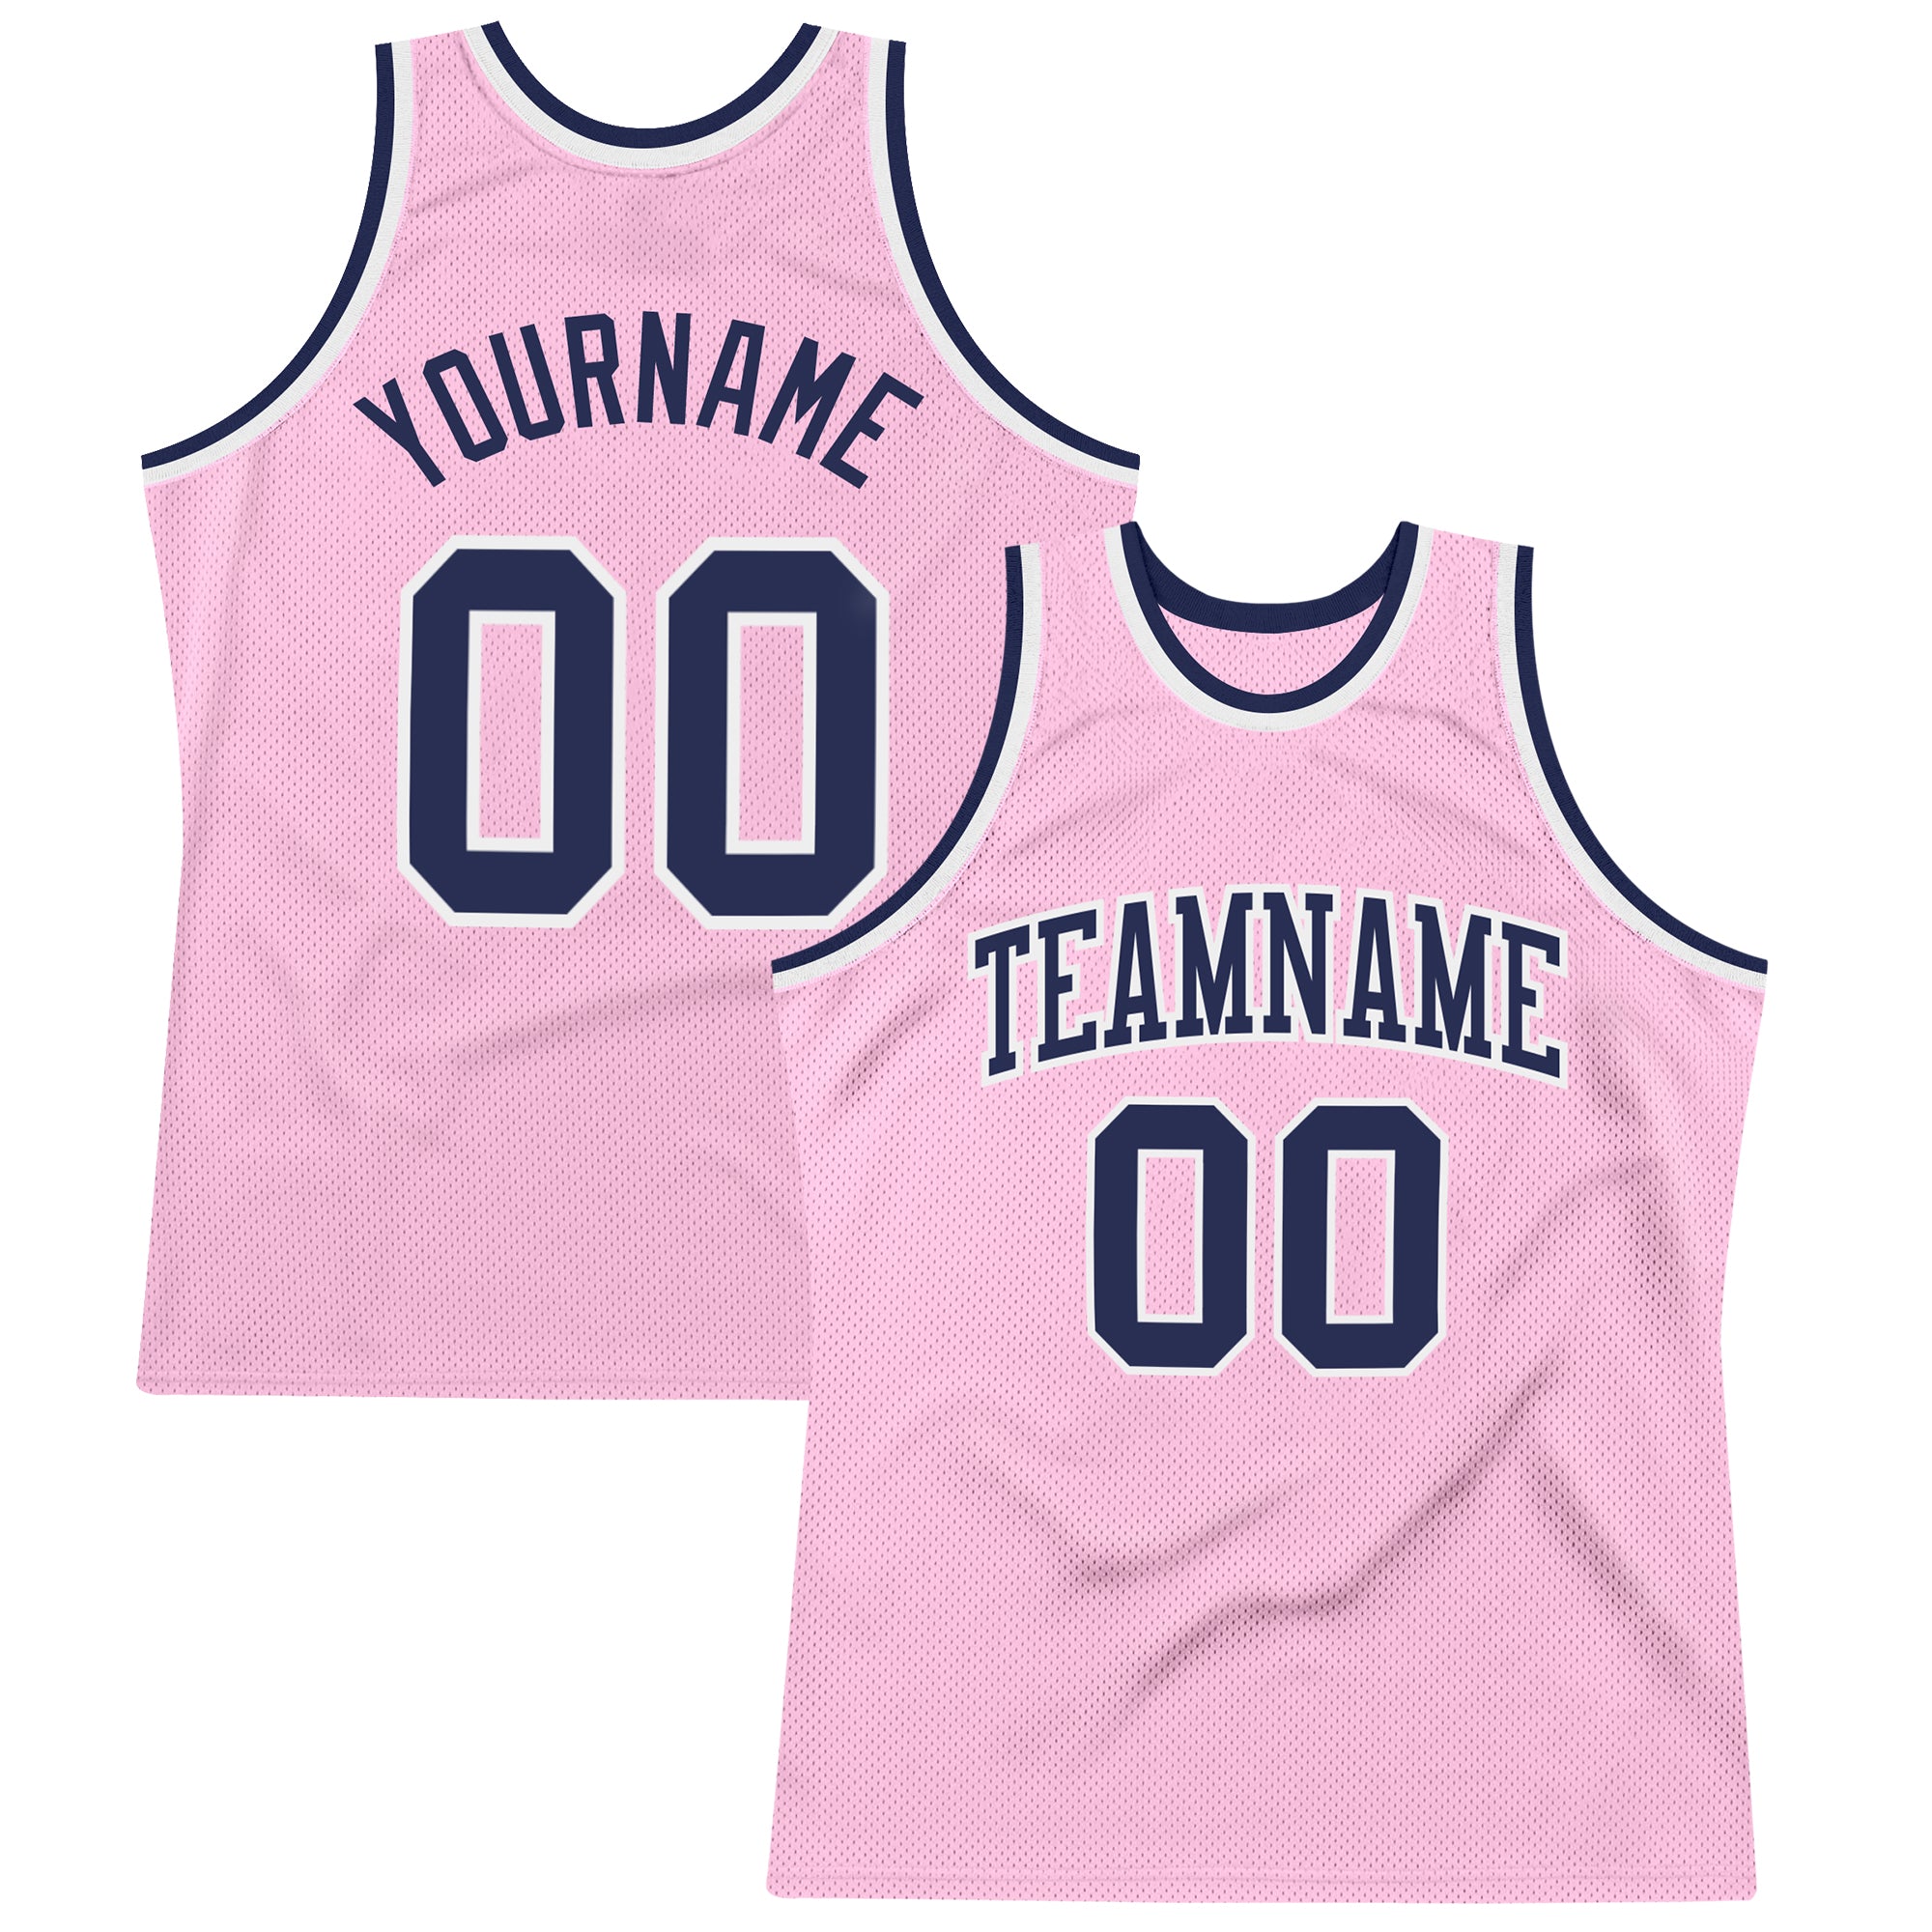 light pink basketball jersey